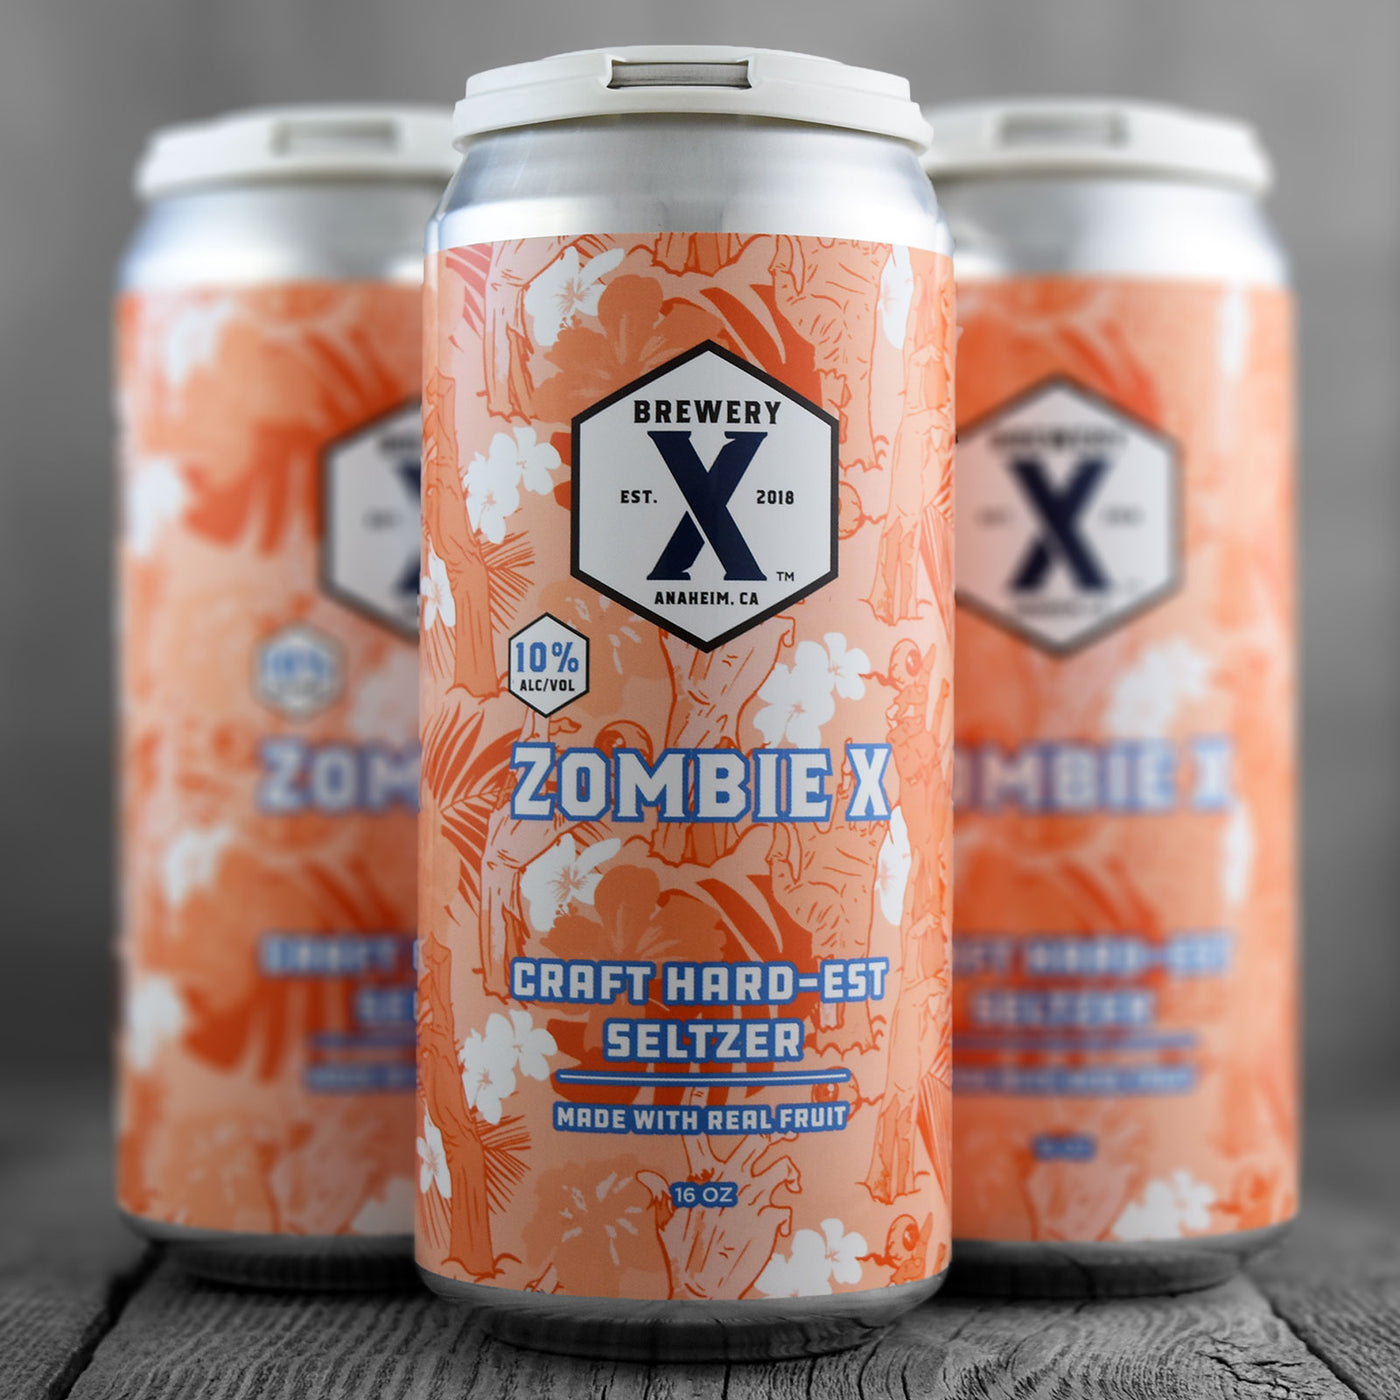 Brewery X Hard-est Seltzer Zombie X